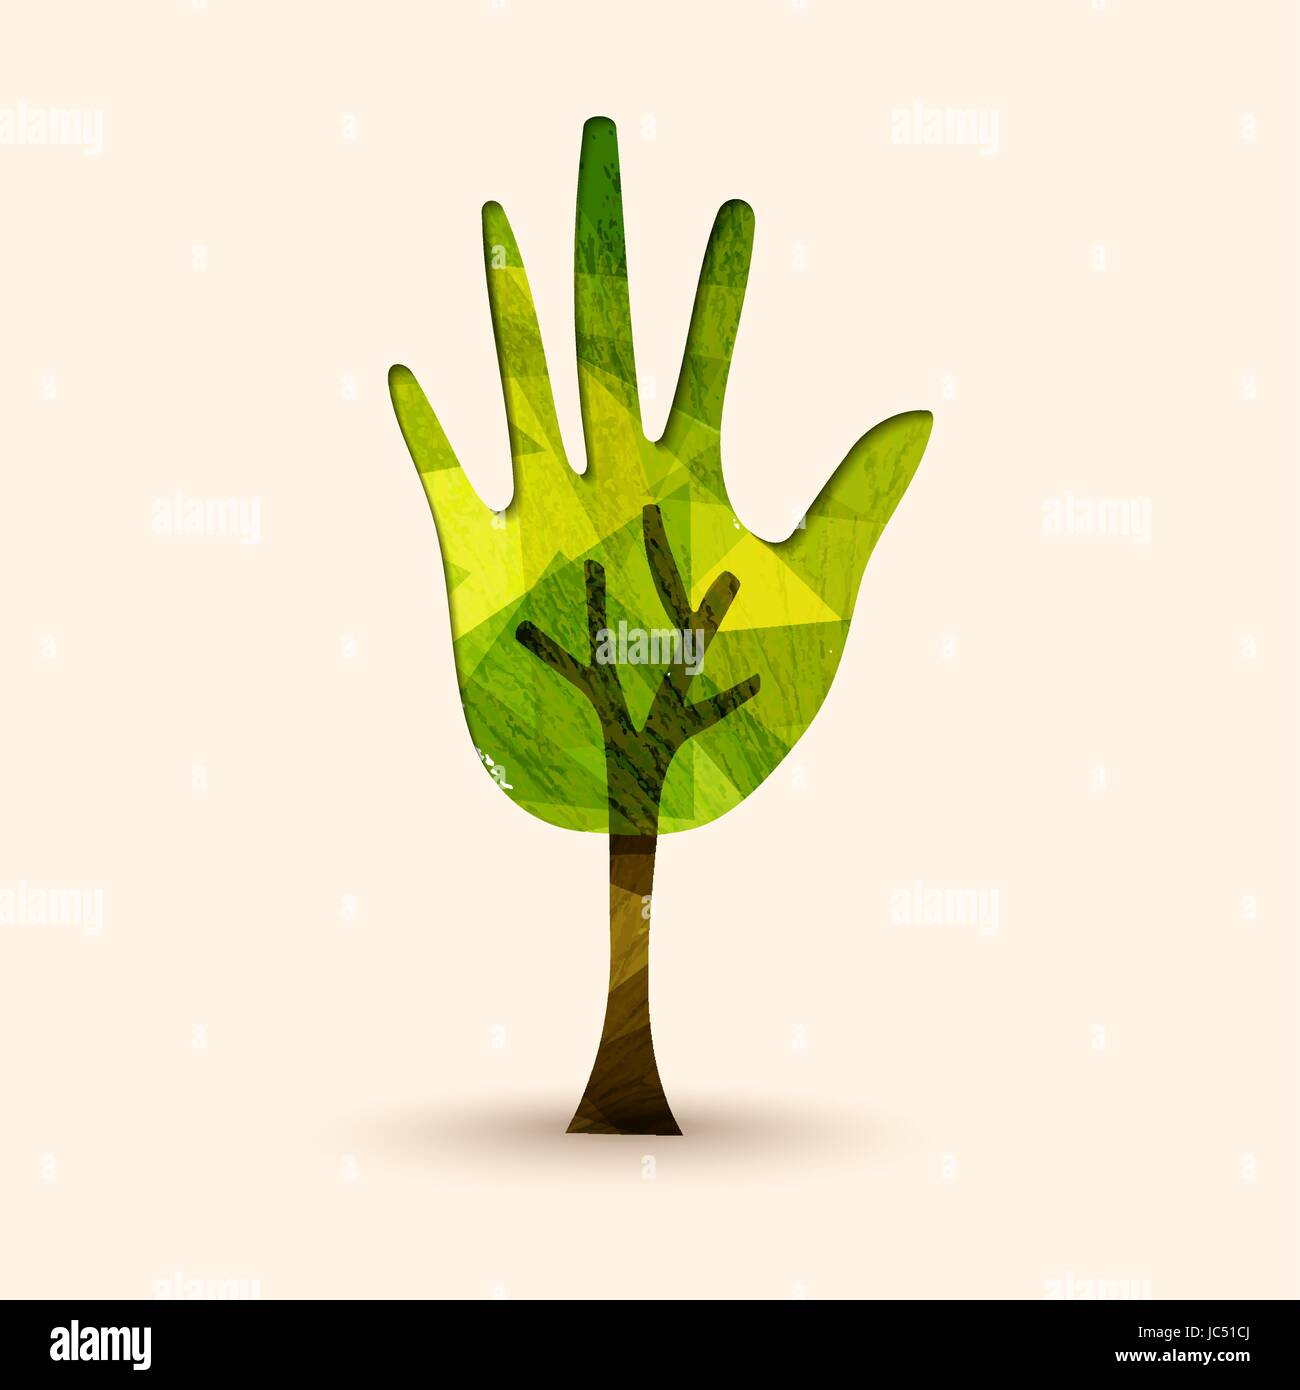 Grüne Hand-Baum-Symbol mit Holzstruktur. Konzept-Illustration für Umwelt-Pflege oder Natur-Help-Projekt. EPS10 Vektor. Stock Vektor